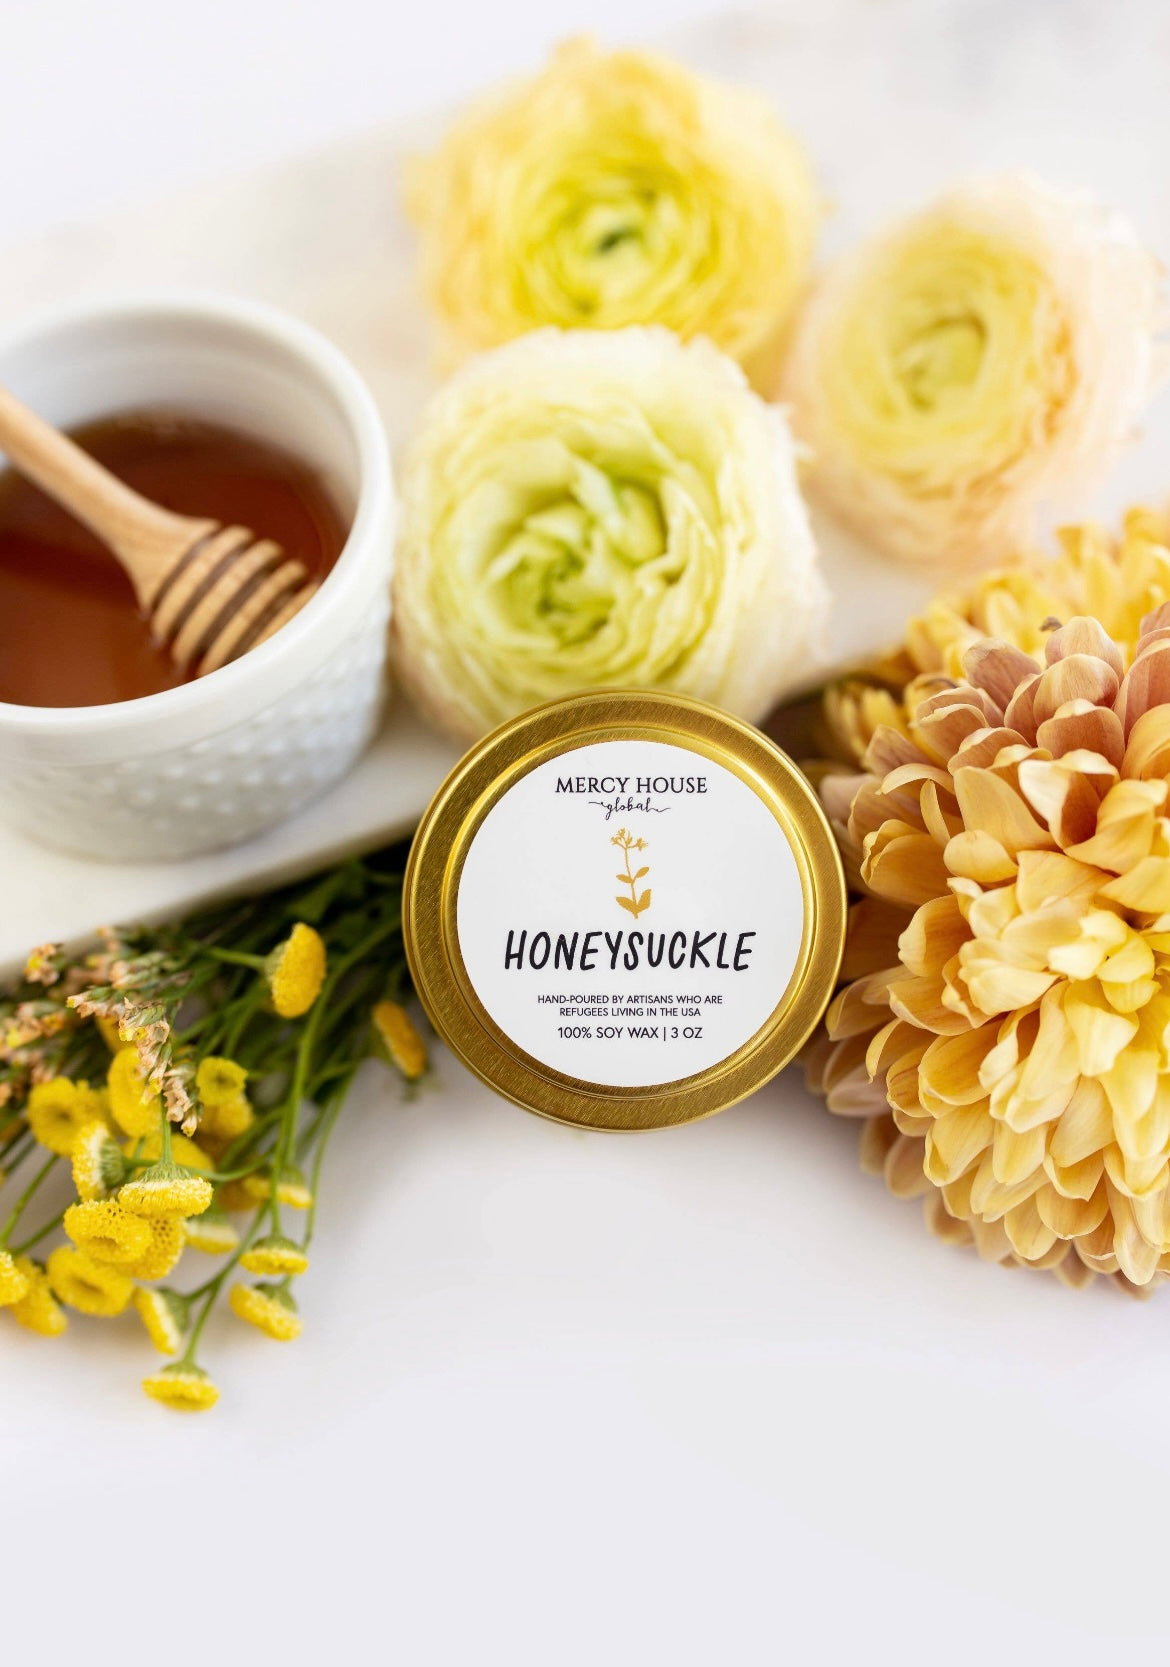 Honeysuckle Tin Candle